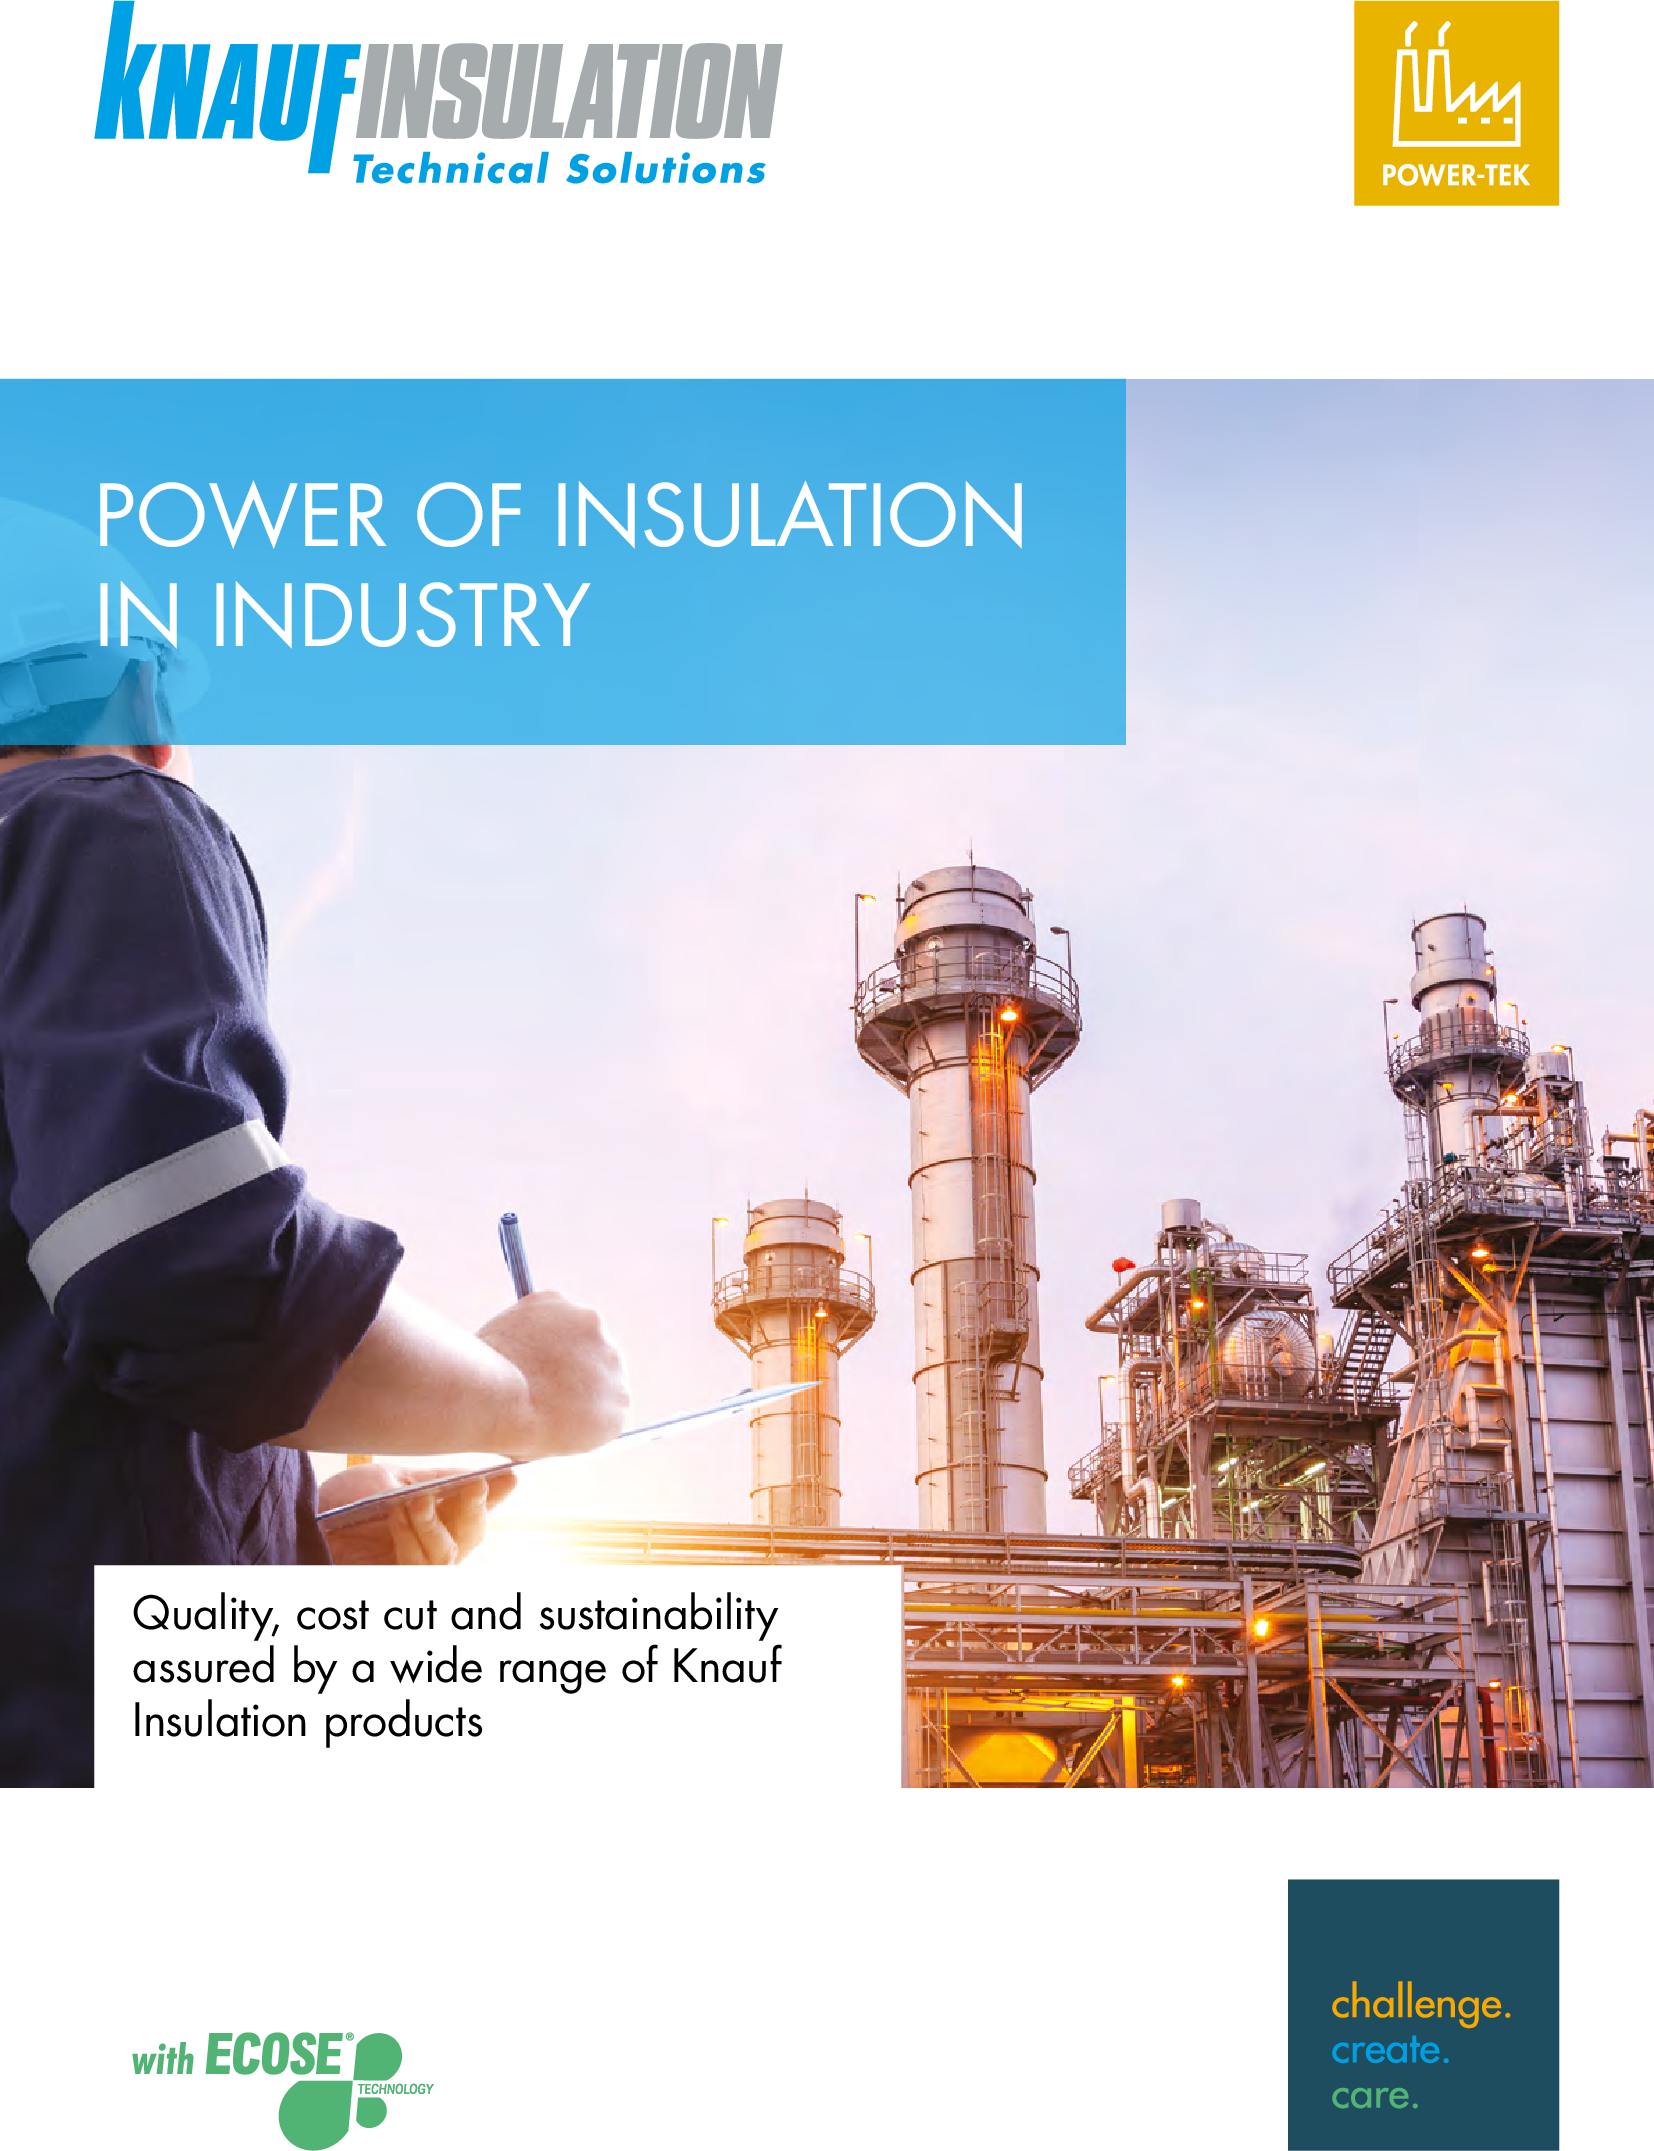 Knauf Insulation TS_ Insulation in industry with Power-teK_EN